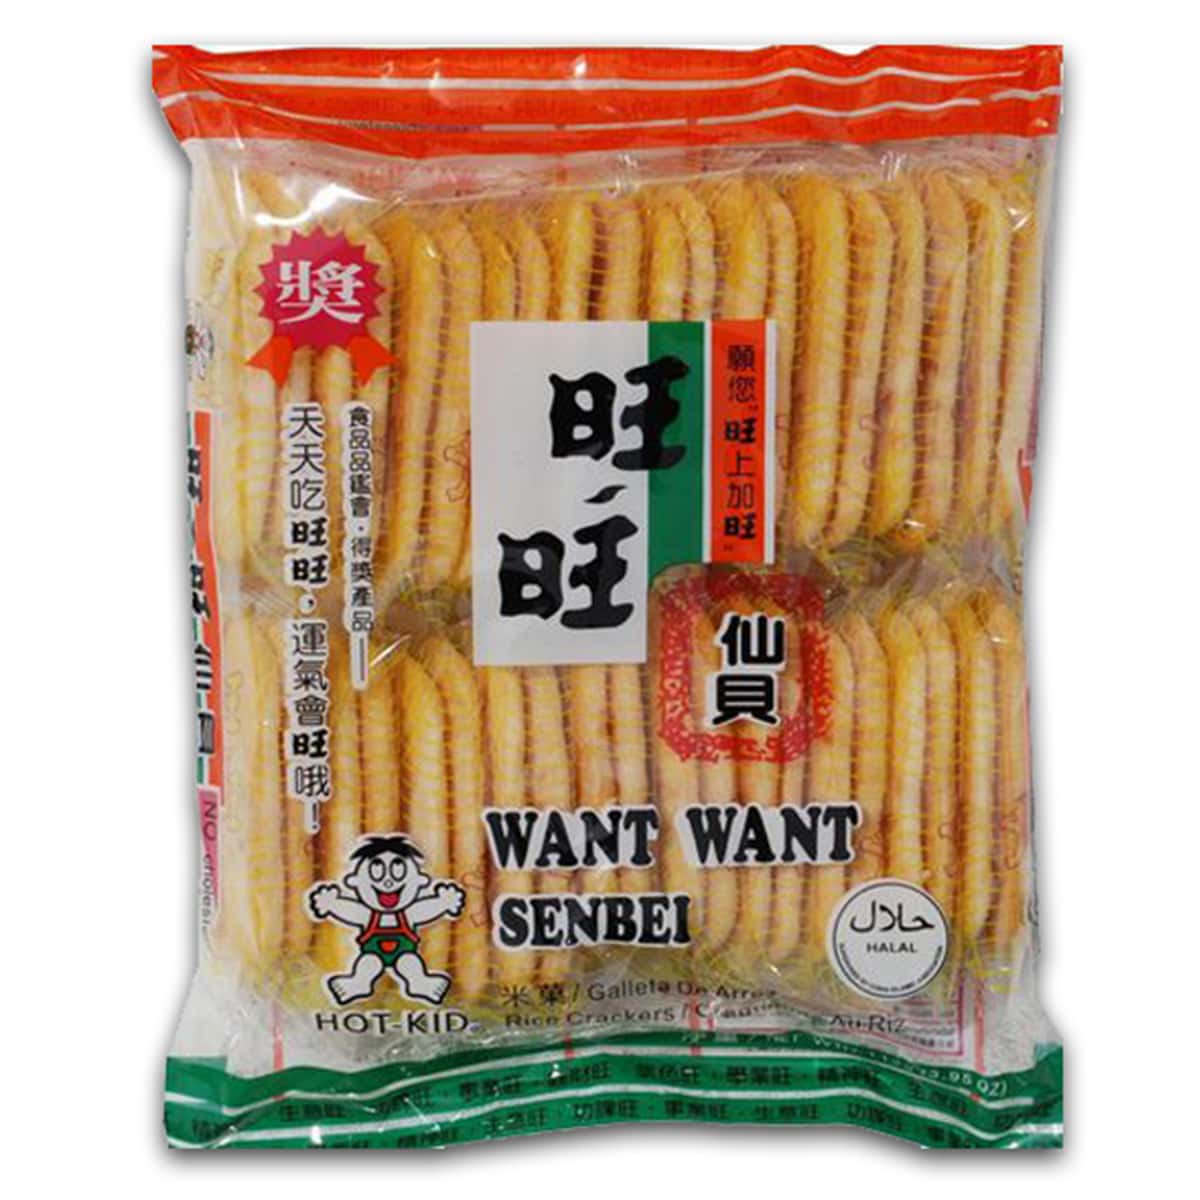 Buy Want Want Hot-kid Senbei Rice Crackers - 112 gm